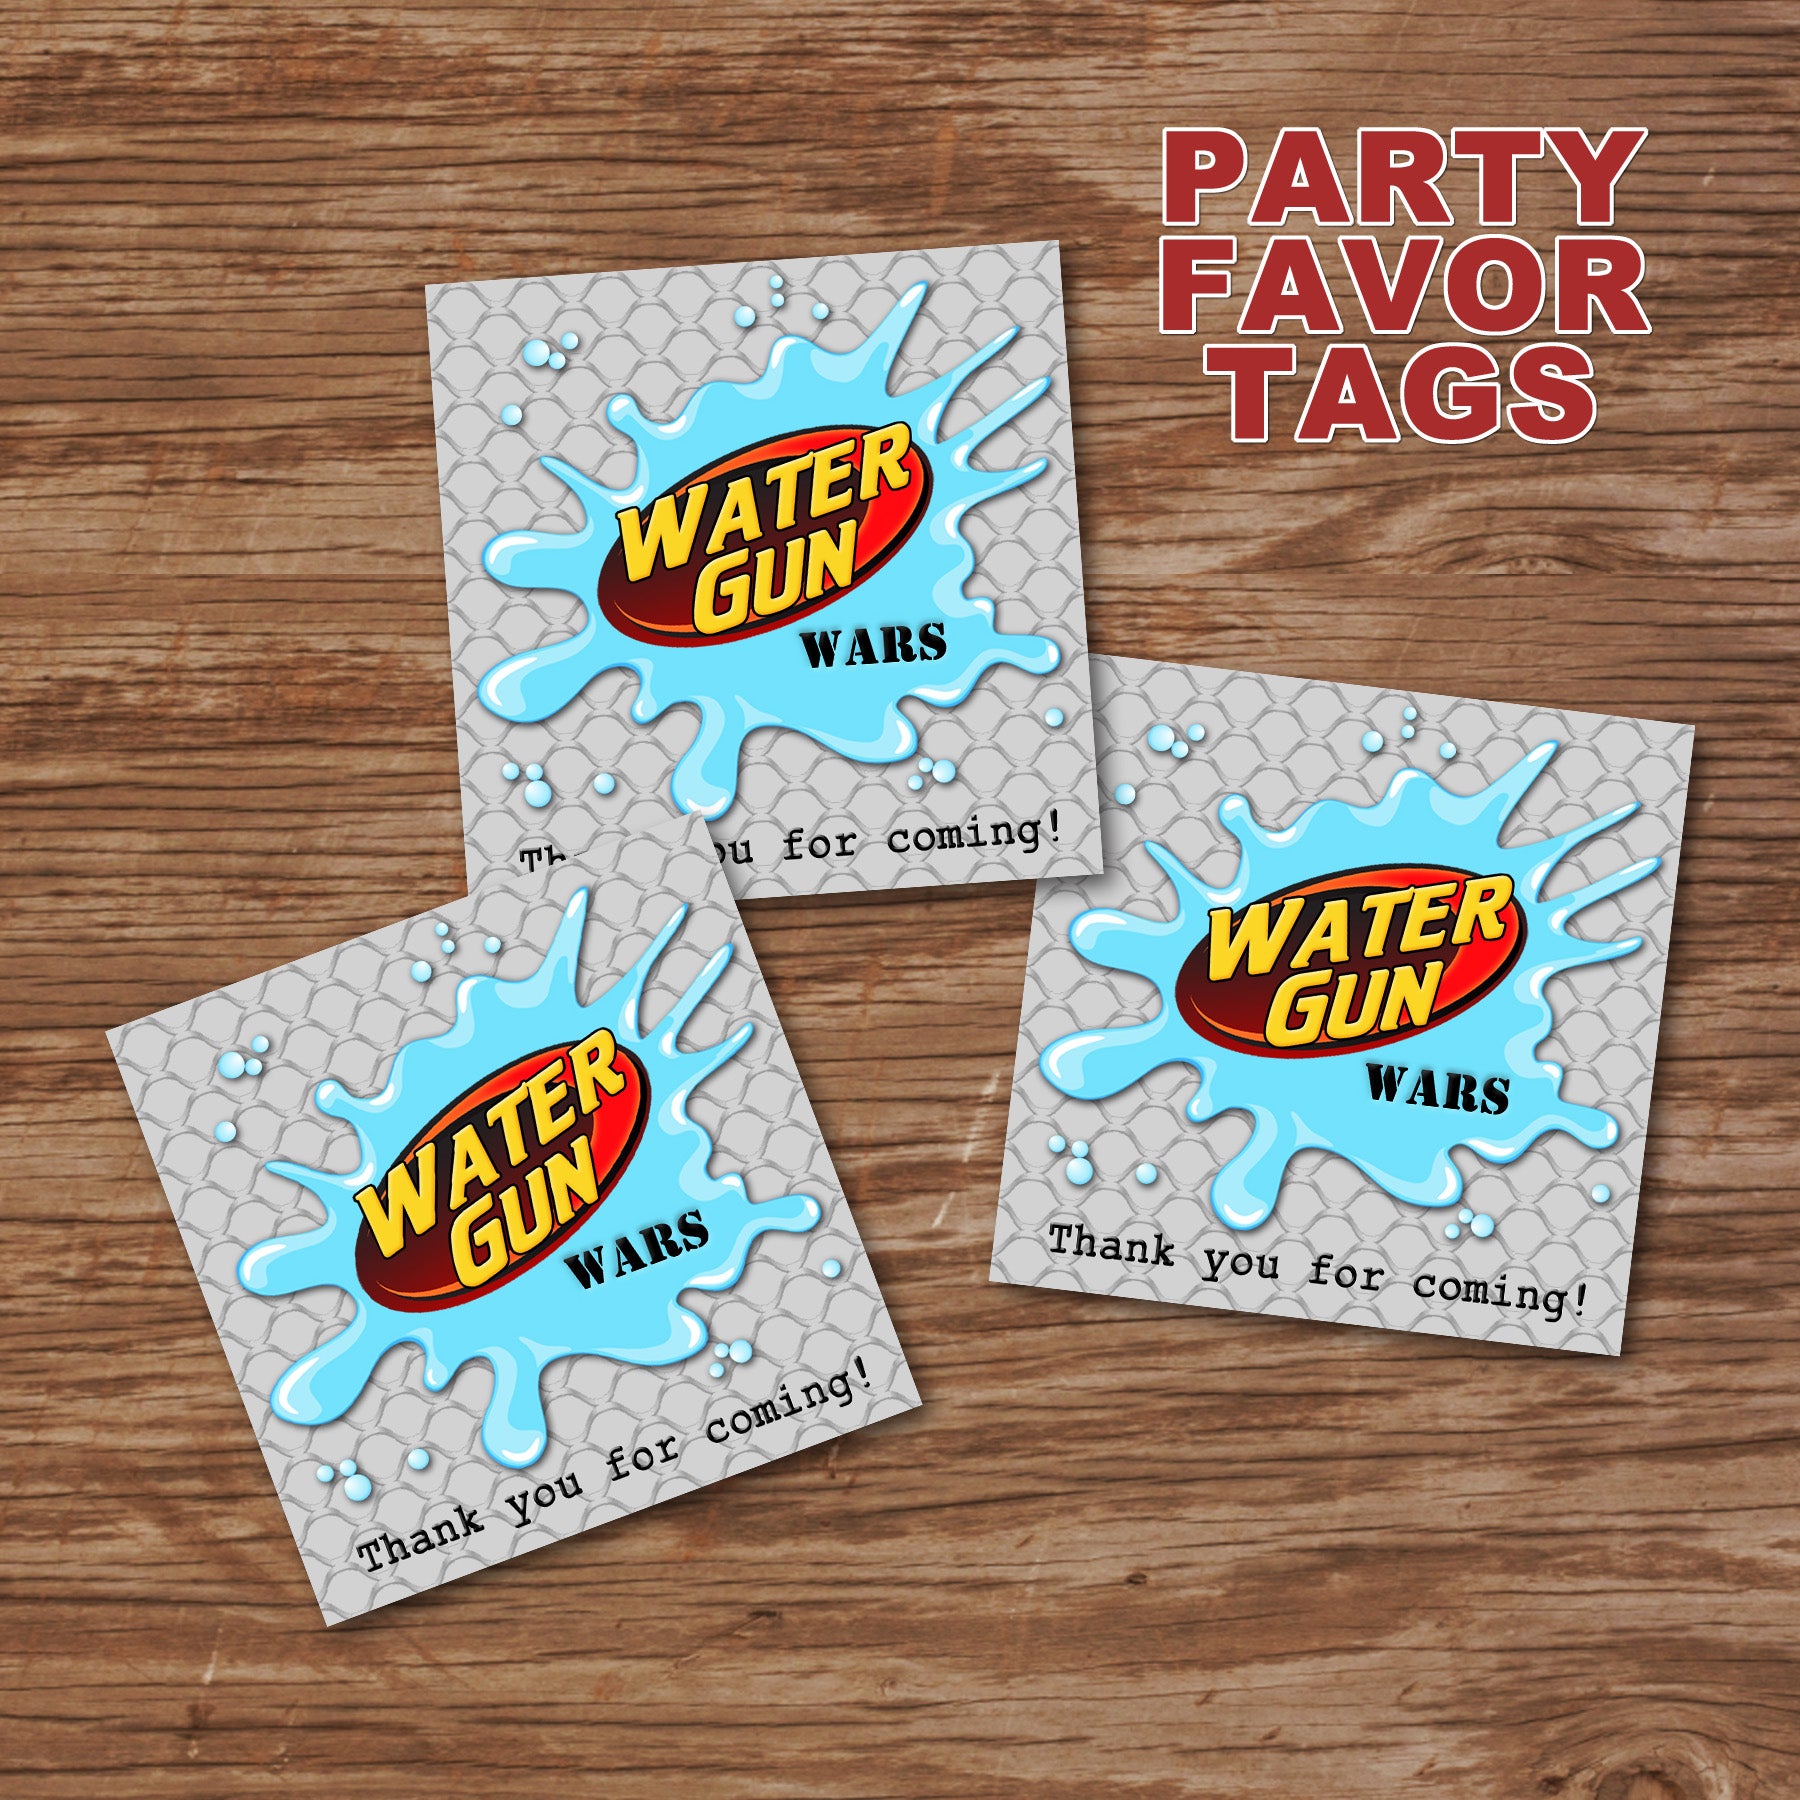 water gun wars party